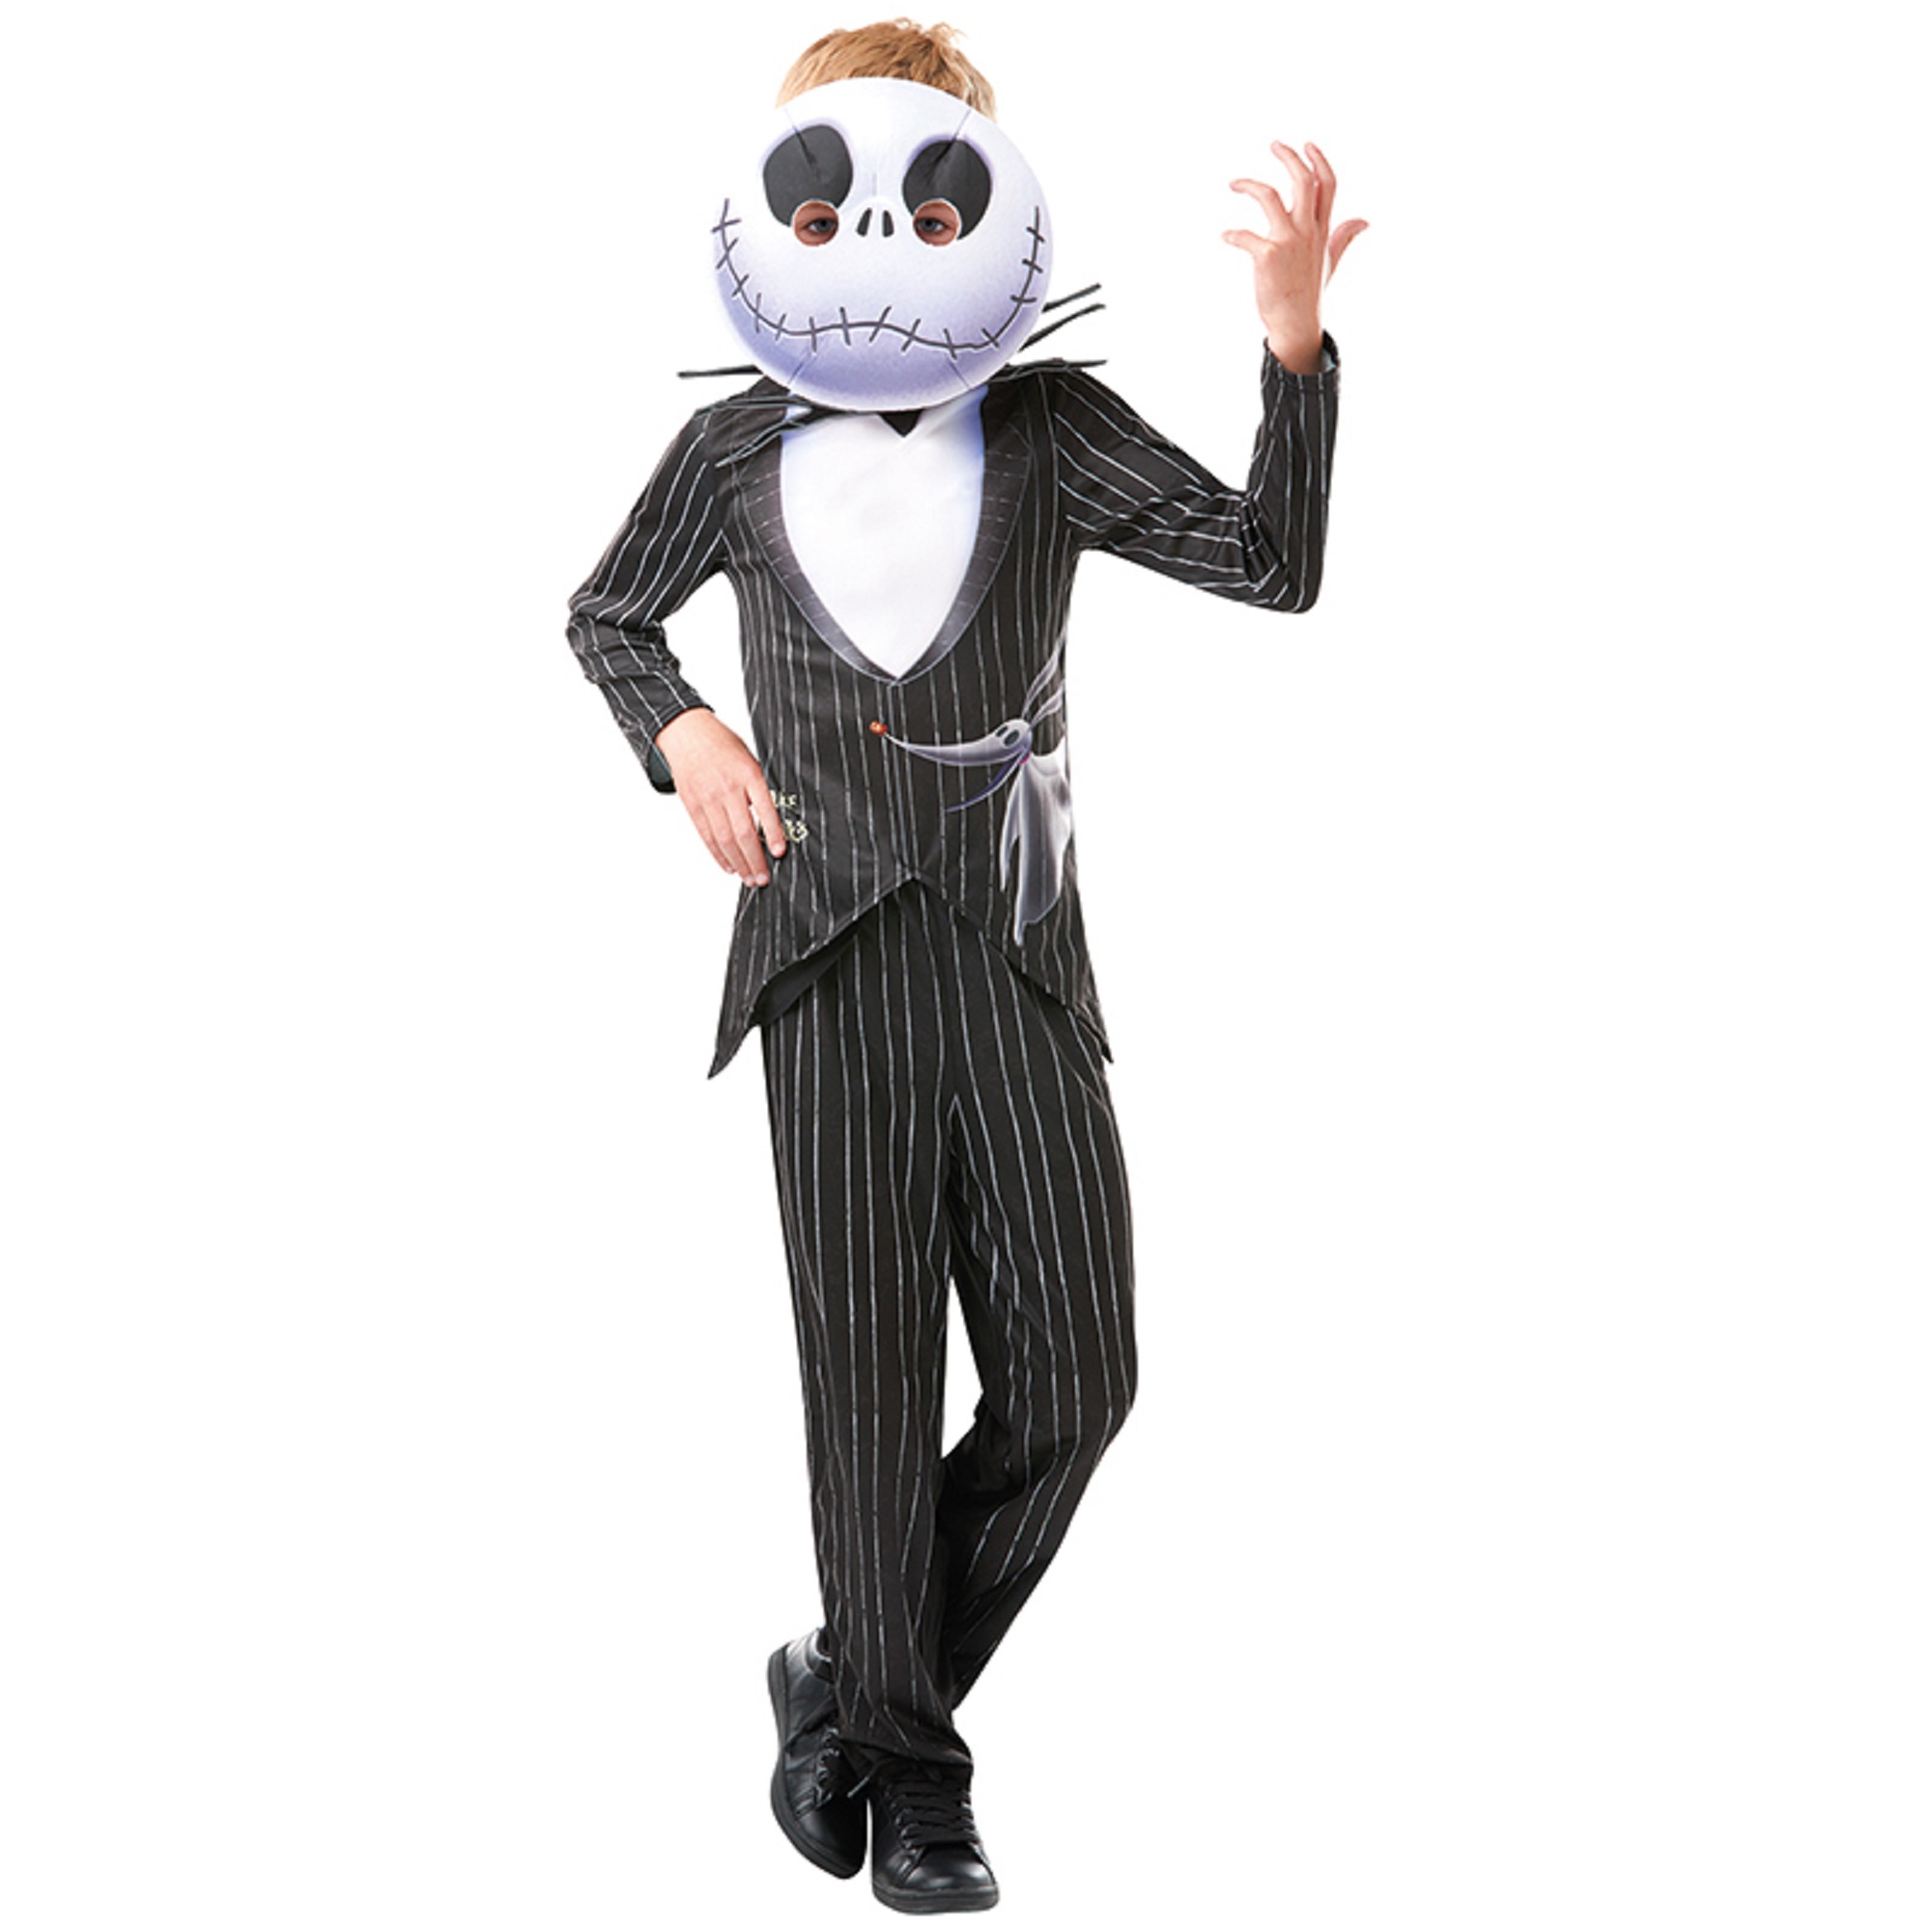 Rubies 300430 - Jack Skellington, Halloween Kinder Kostüm, Nightmare before Christmas, Größen ca. 3 - 10 Jahre